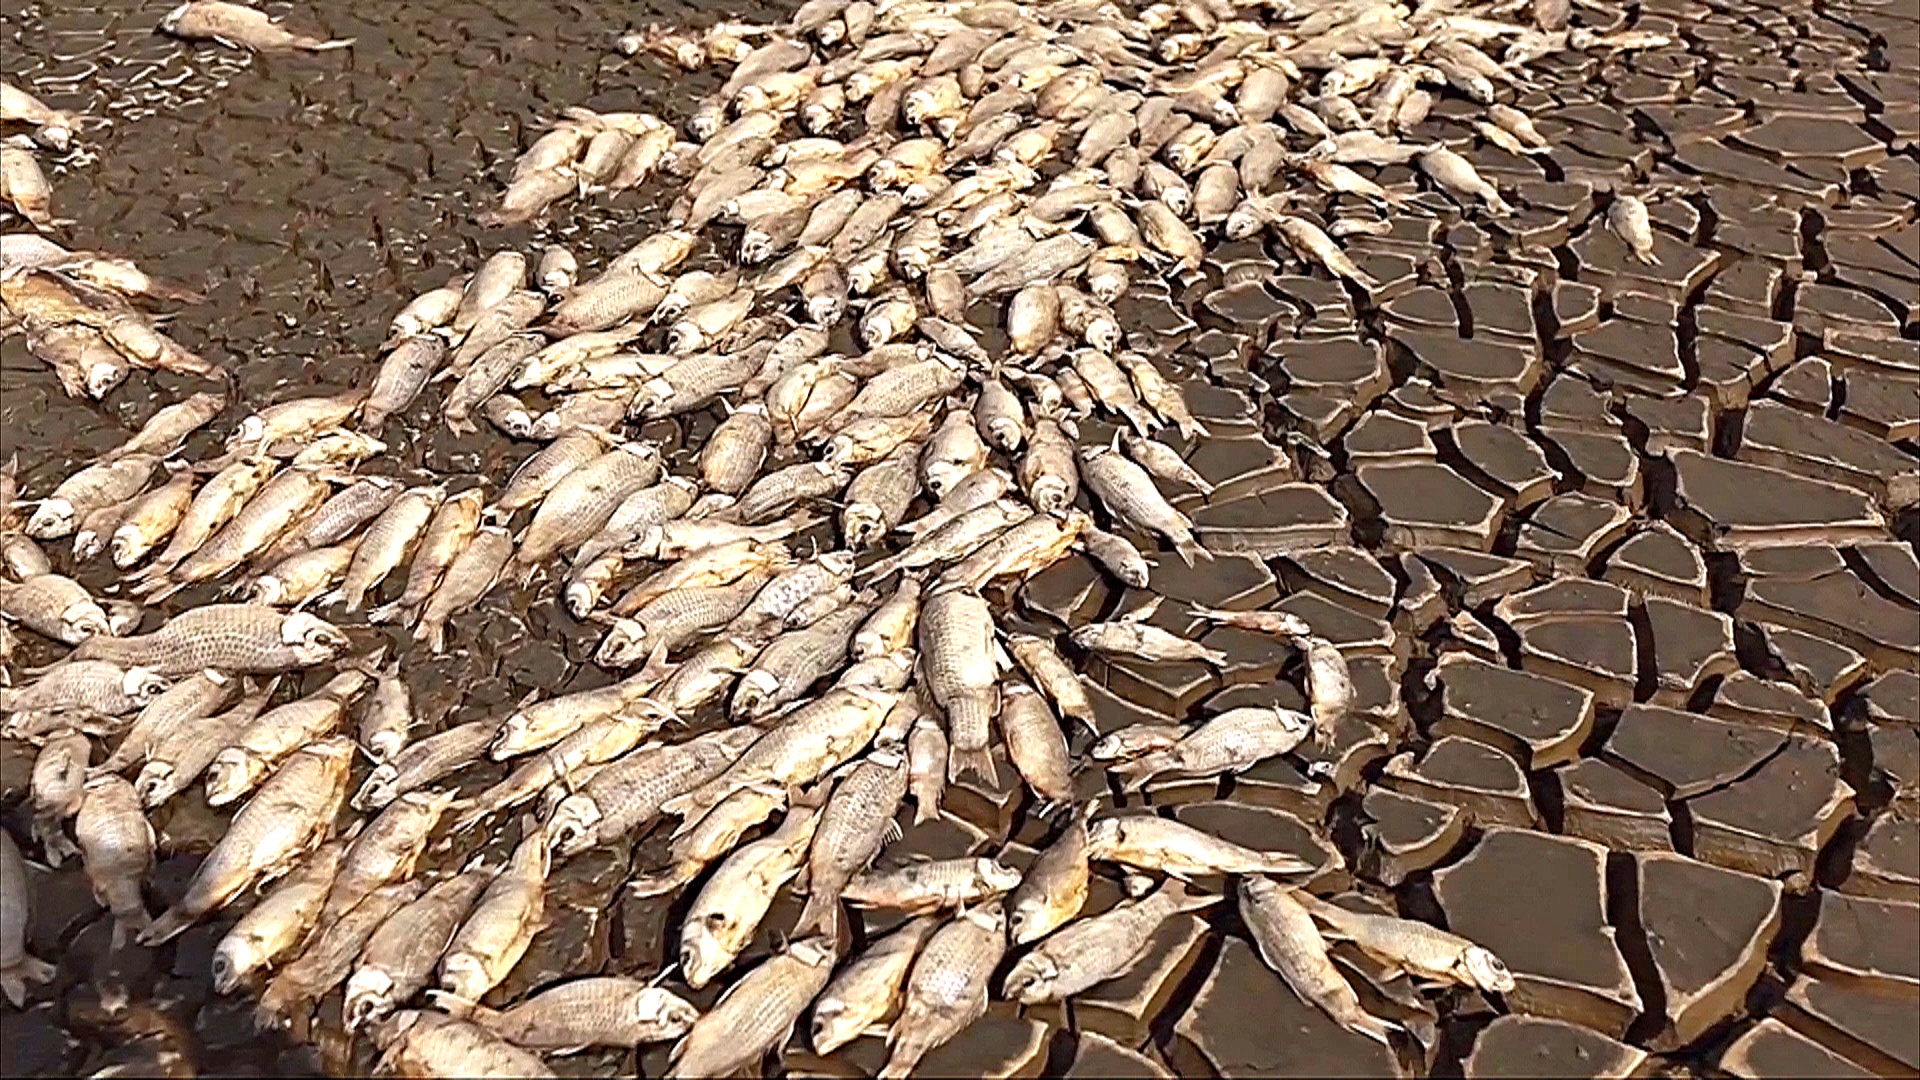 Мёртвая рыба заполнила берега лагуны в Мексике